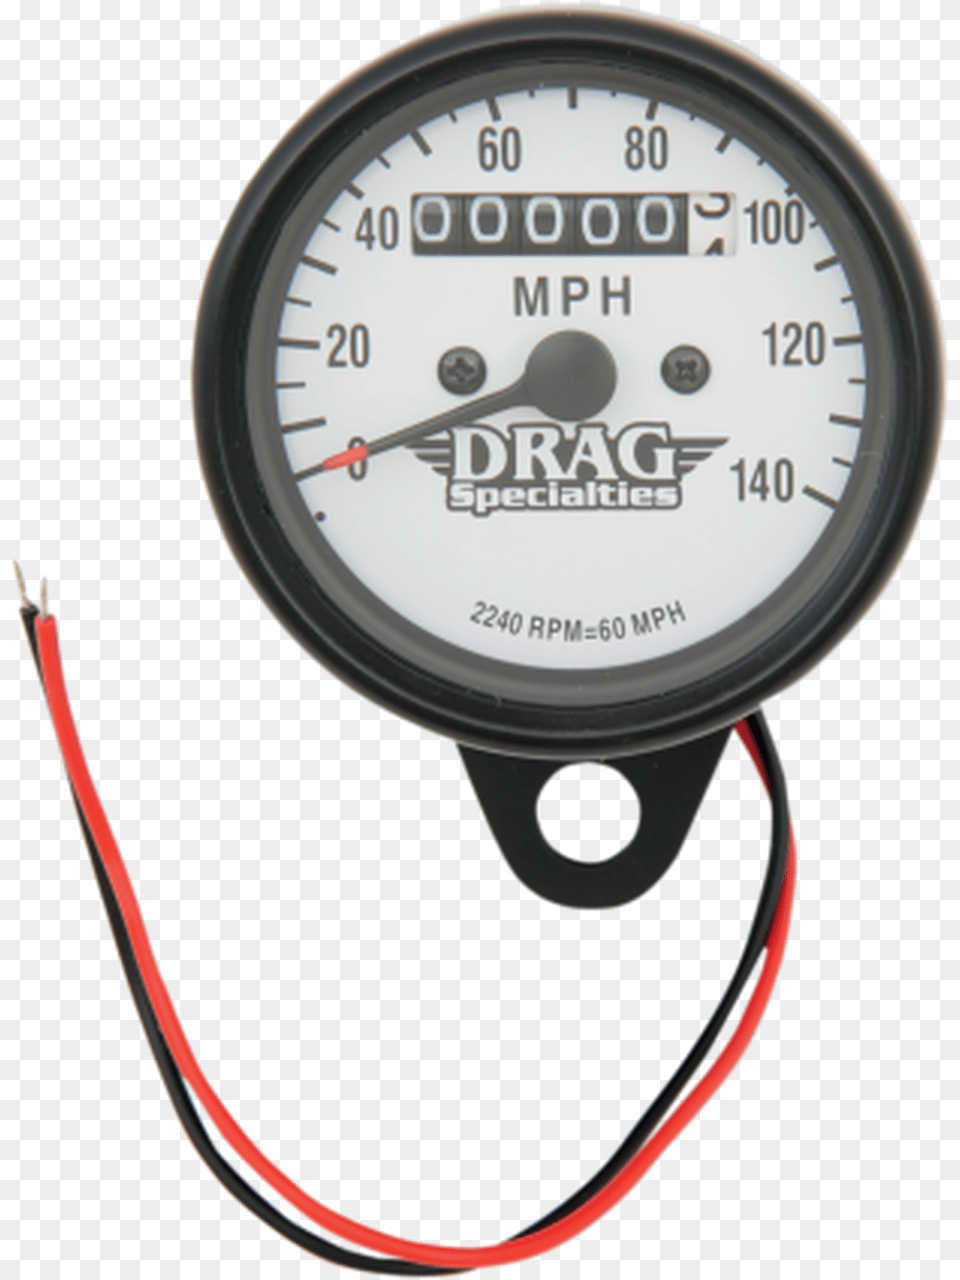 Speedometer, Gauge, Wristwatch, Tachometer Png Image